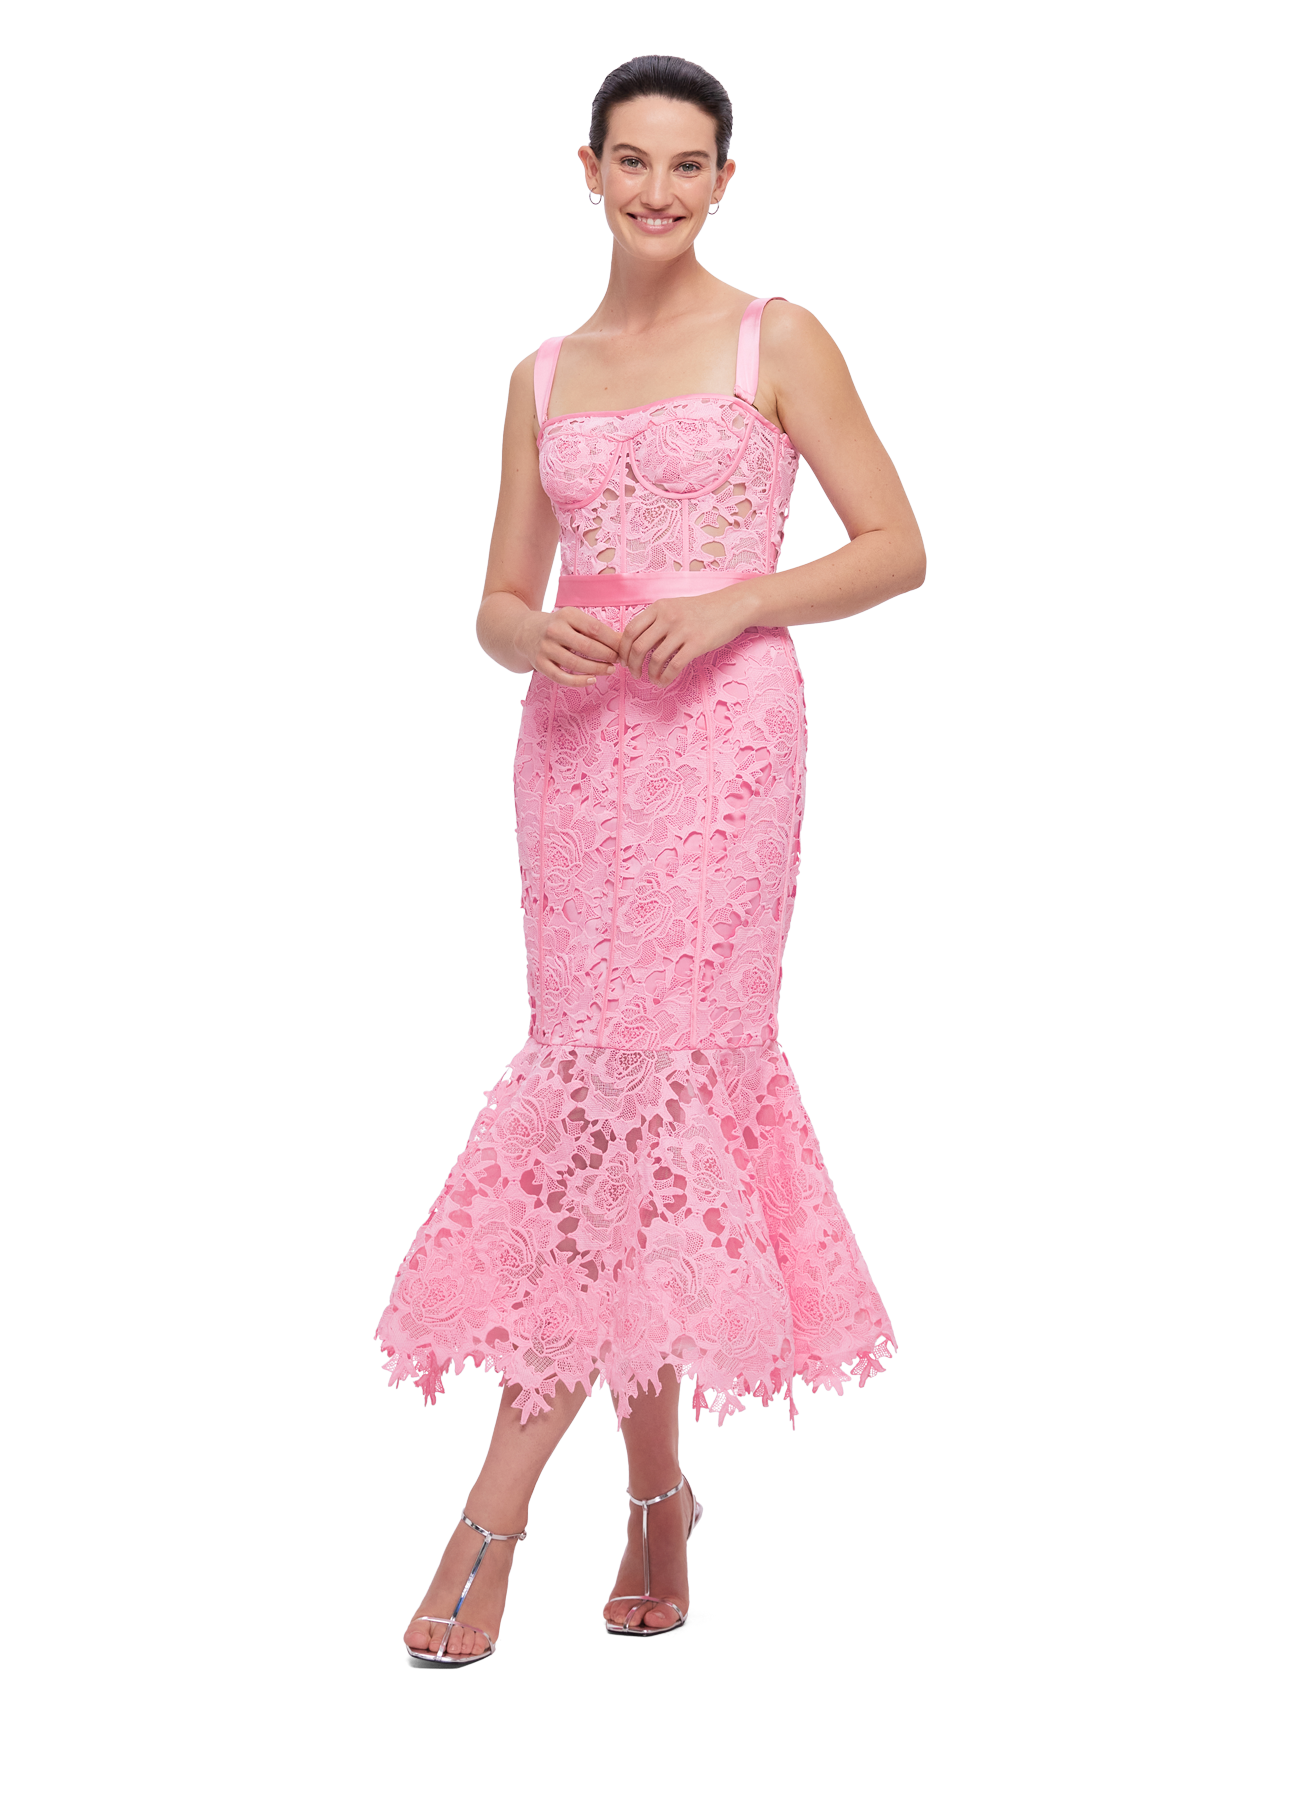 Clover Lace Bustier Ruffle Midi Dress